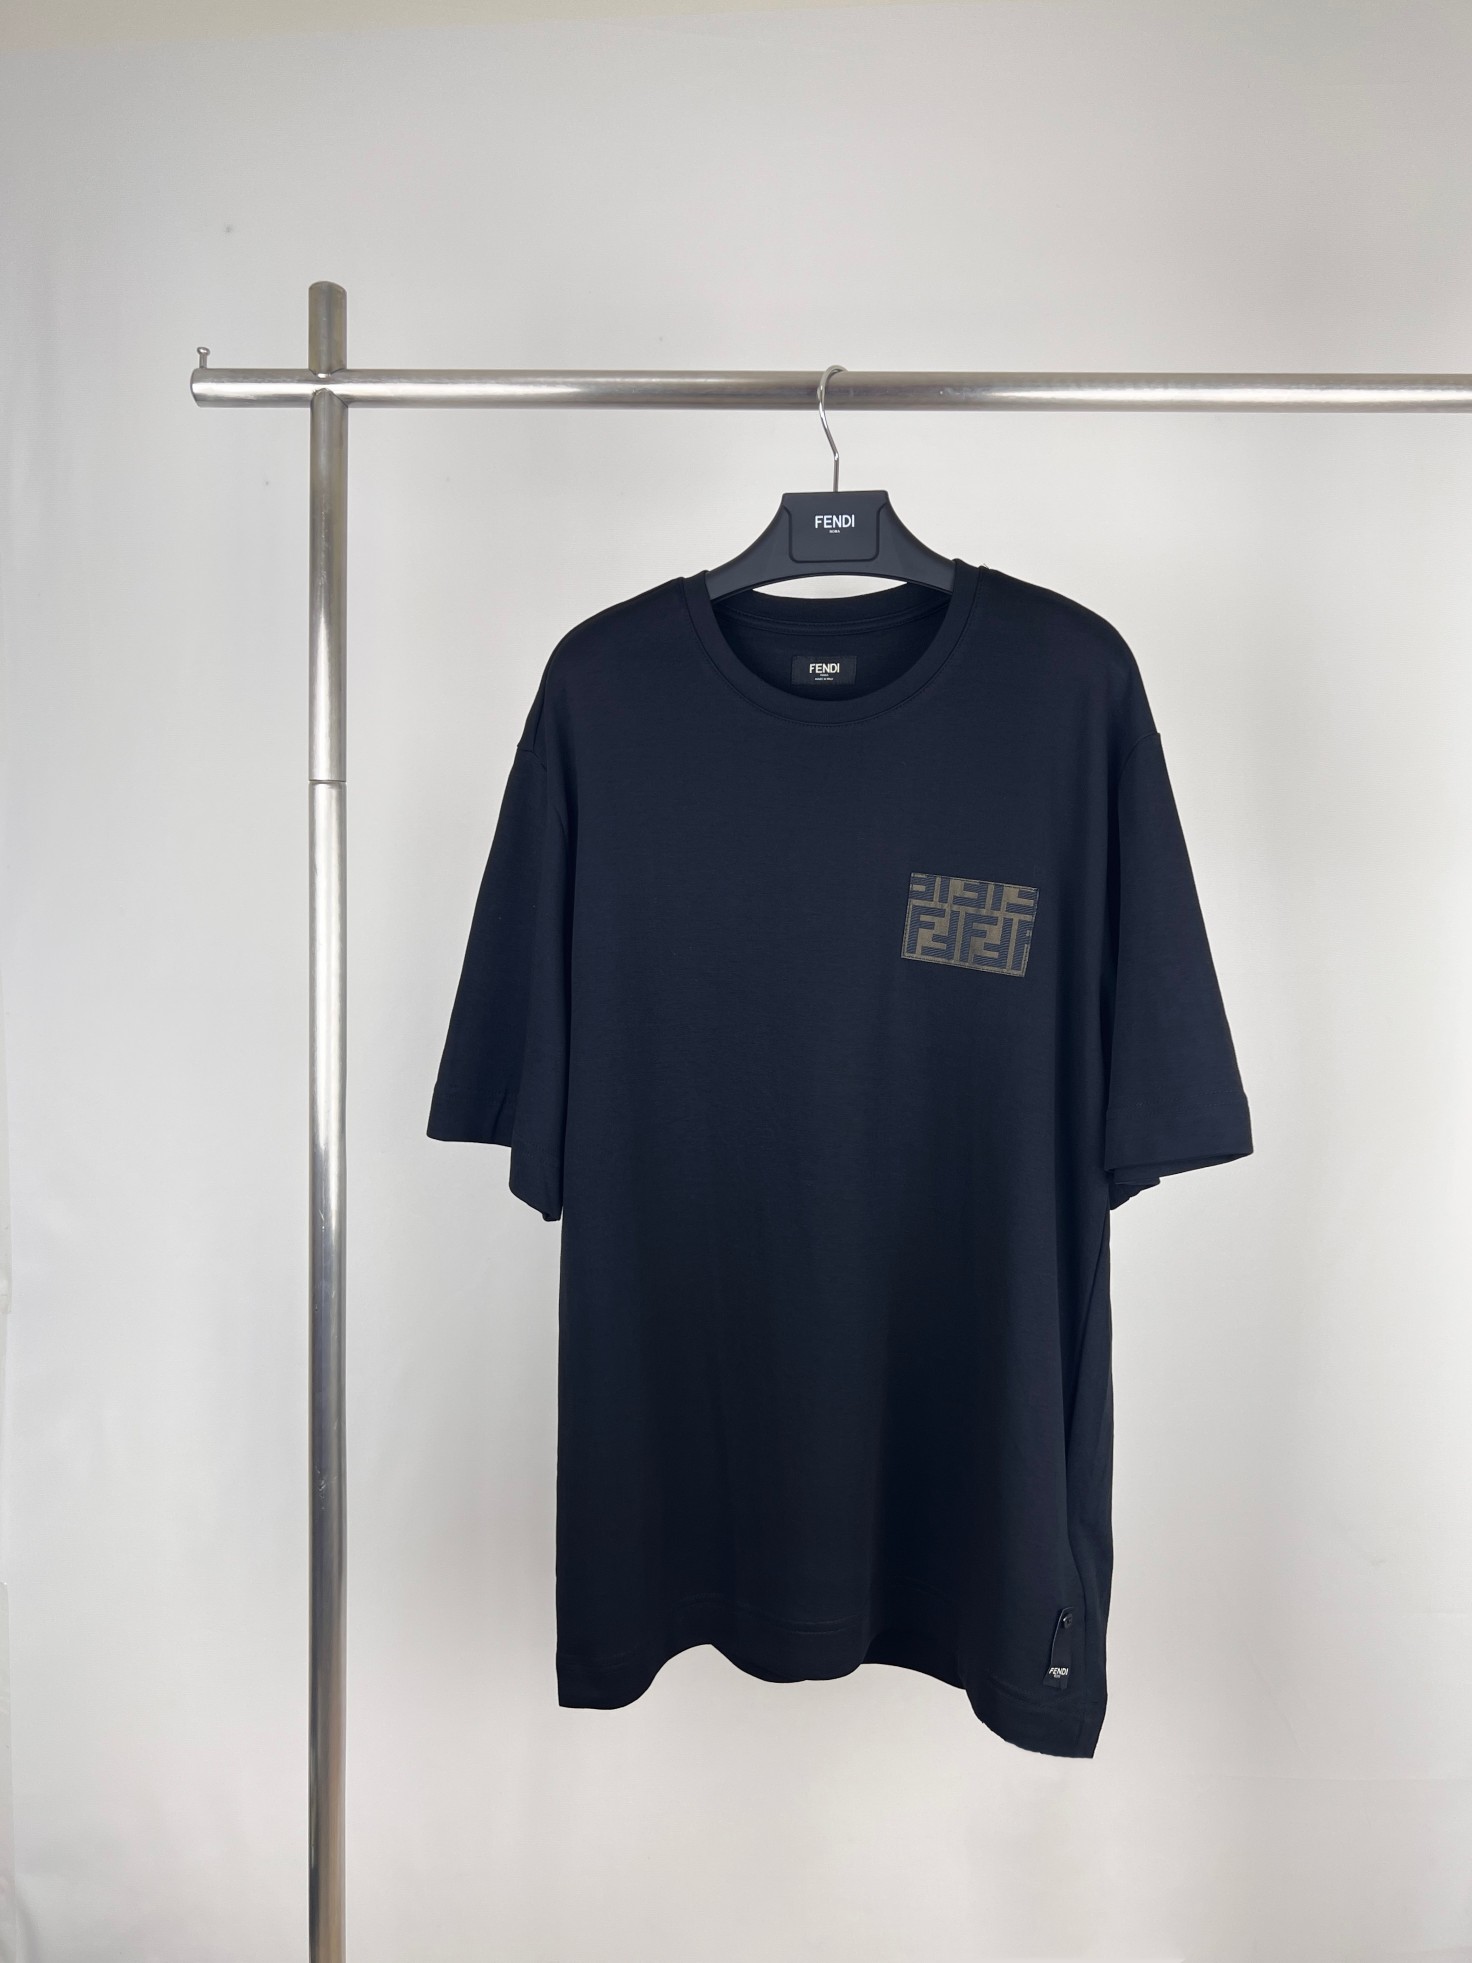 Fendi Clothing T-Shirt Embroidery Cotton Short Sleeve